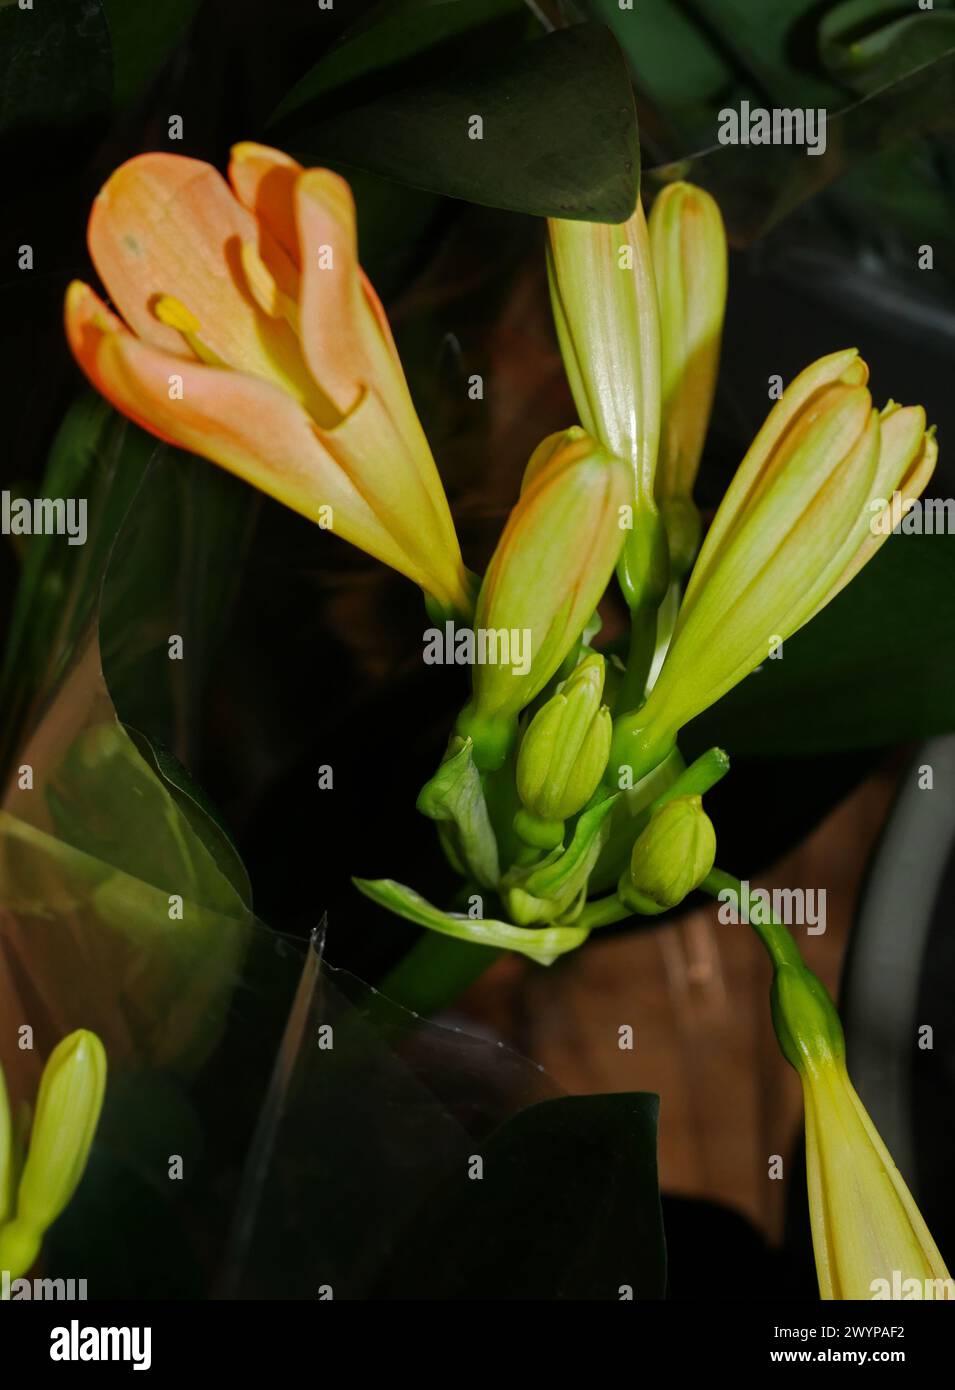 Clivia miniata close-up Stock Photo